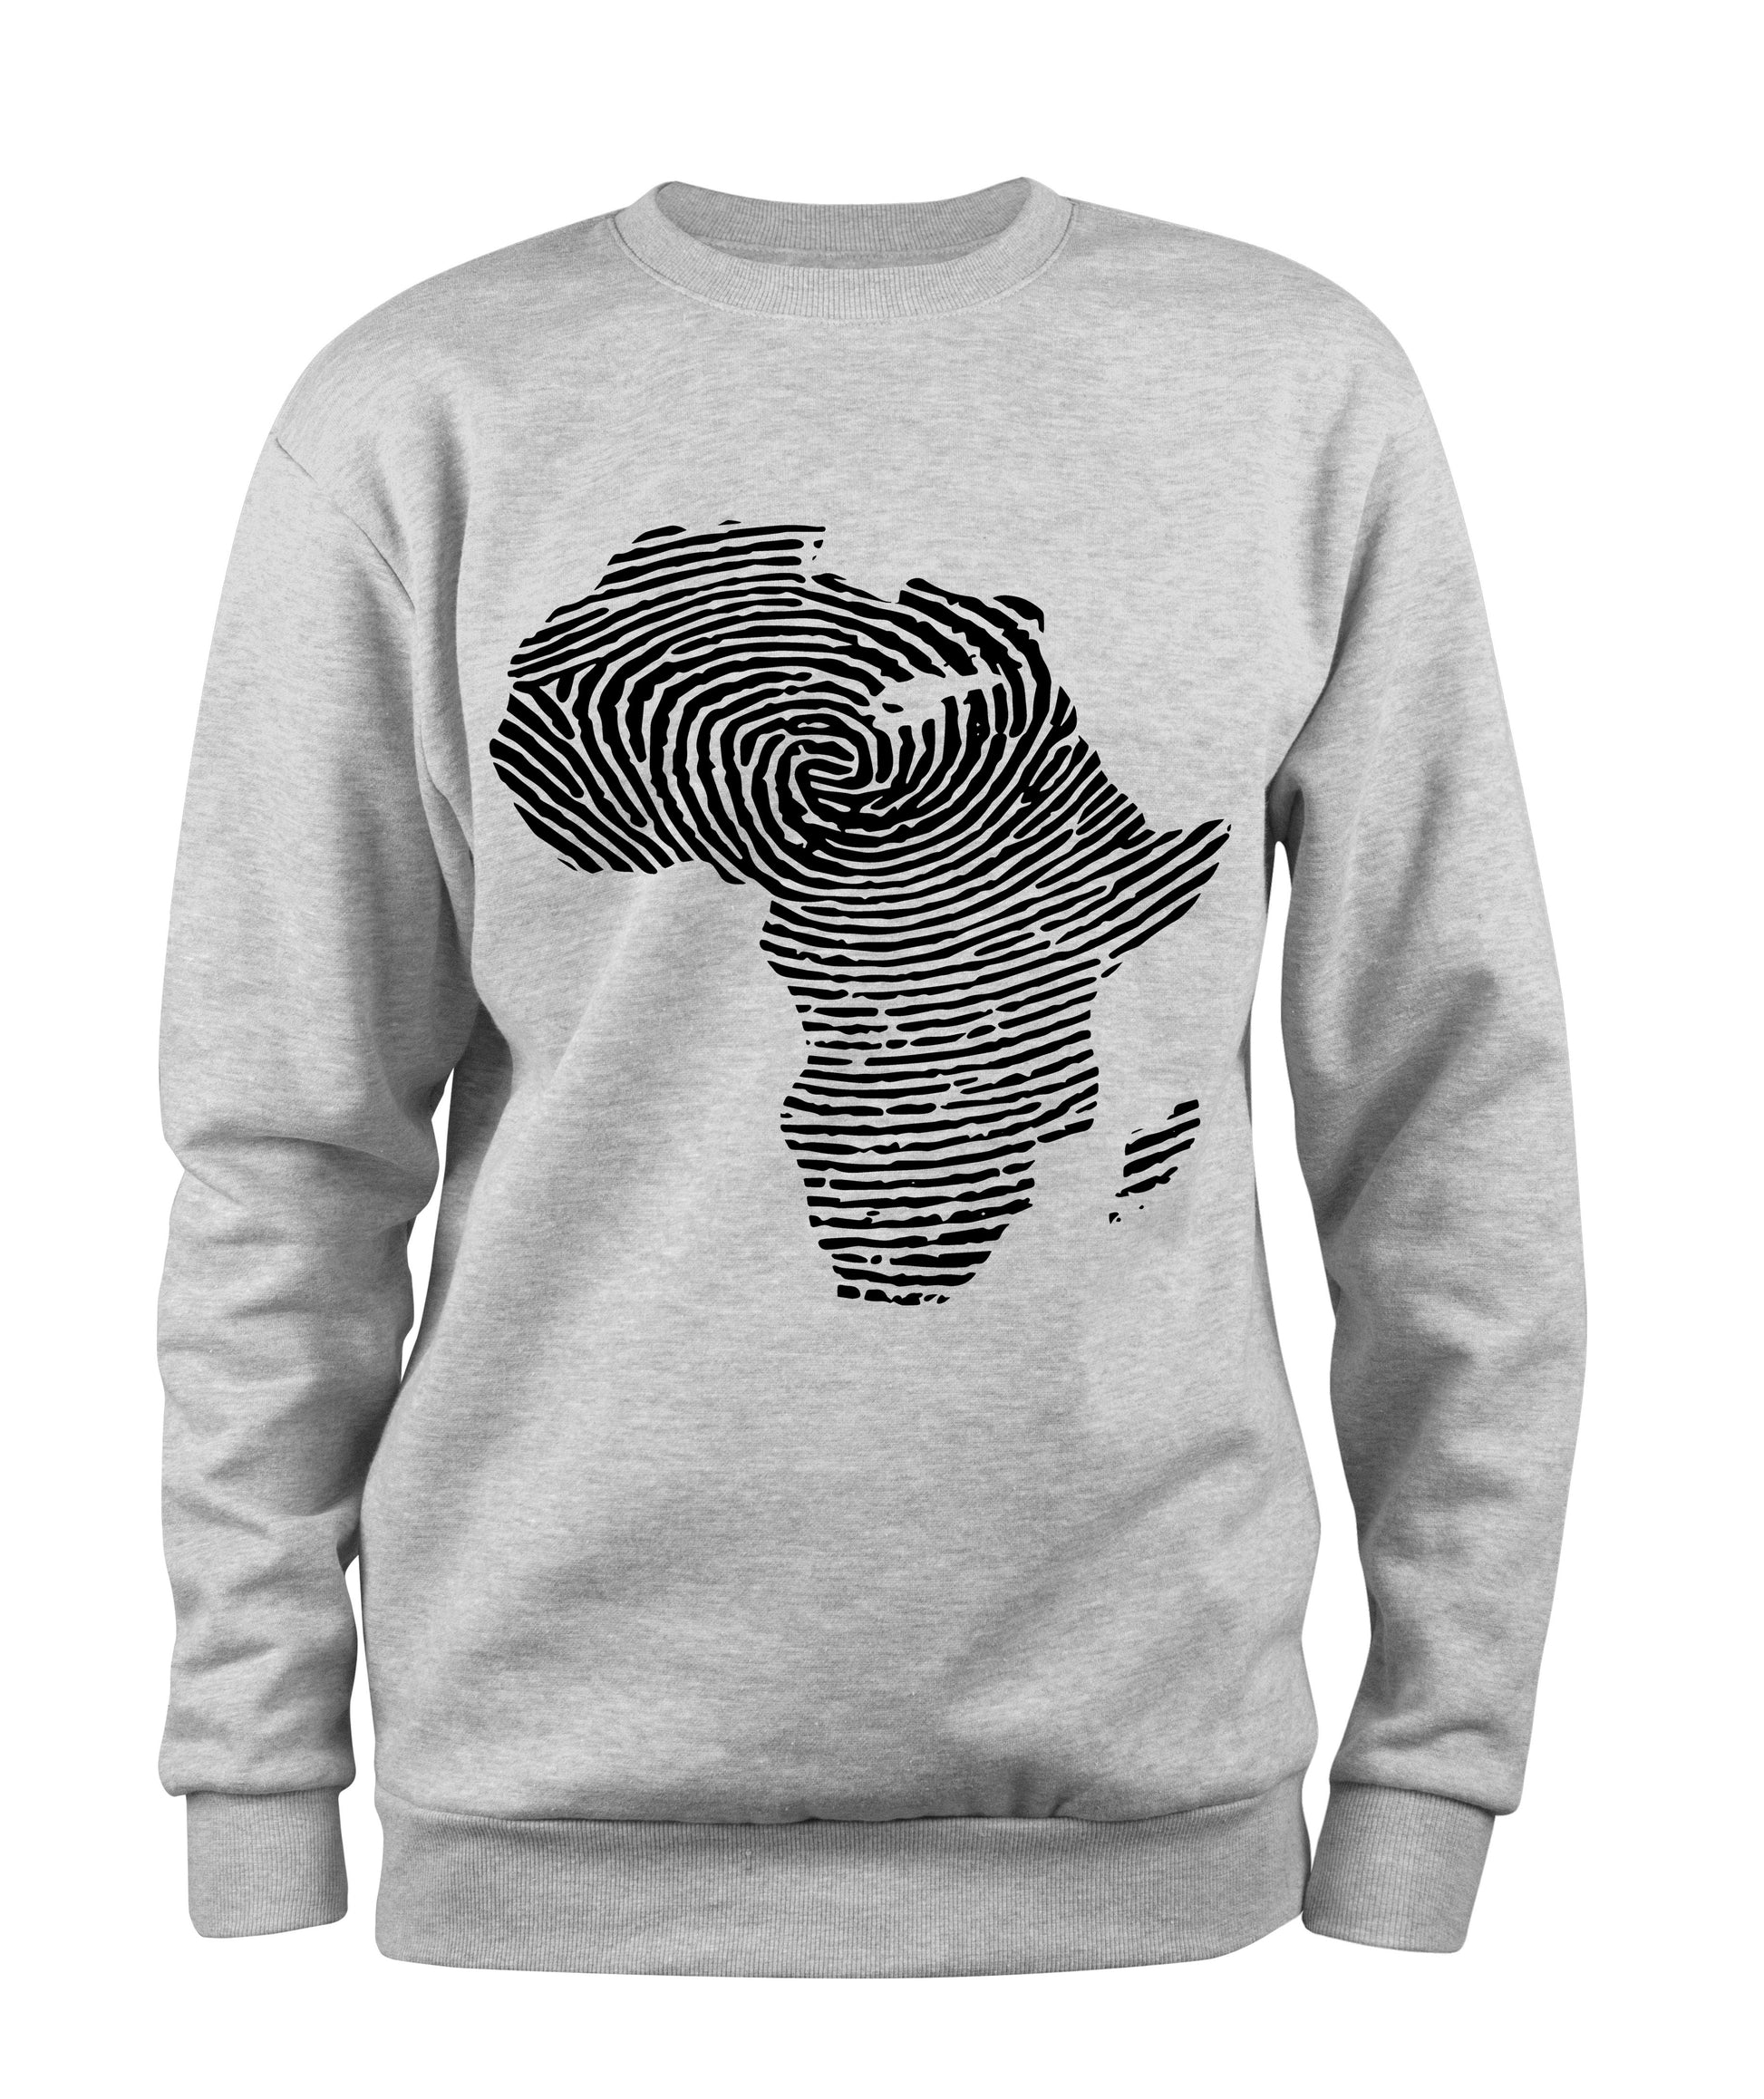 Africa Finger Print Sweatshirt - Black10.com